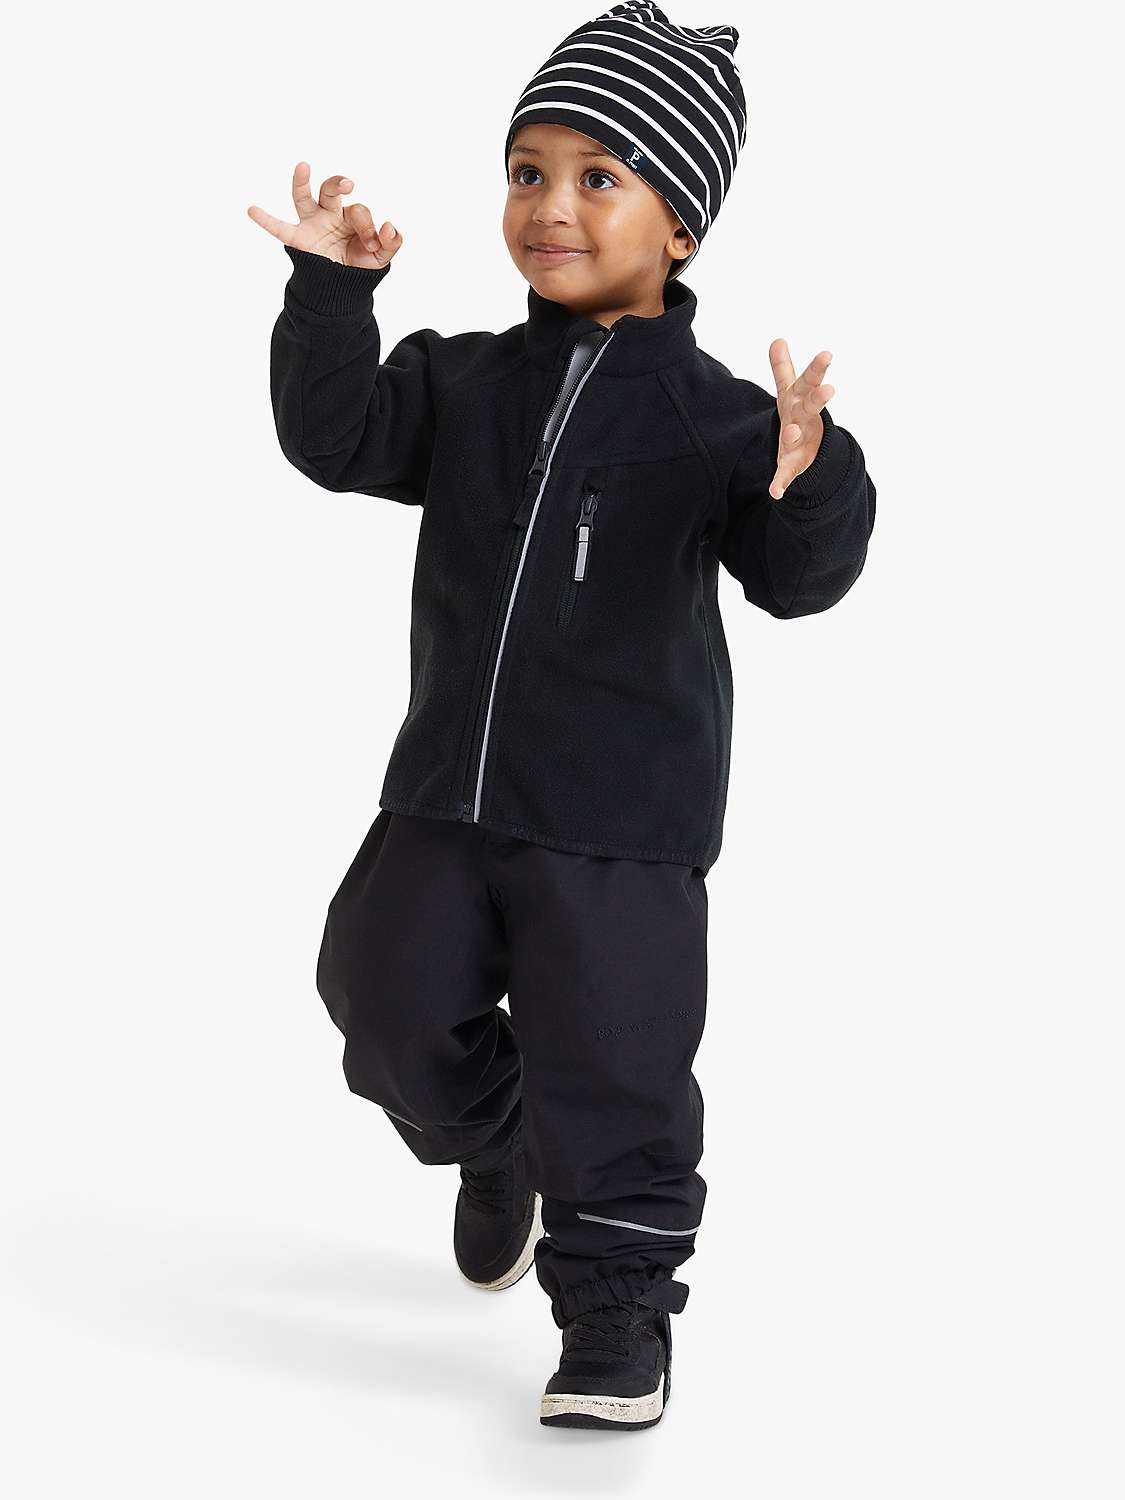 Buy Polarn O. Pyret Kids' Fleece Jacket, Navy Online at johnlewis.com